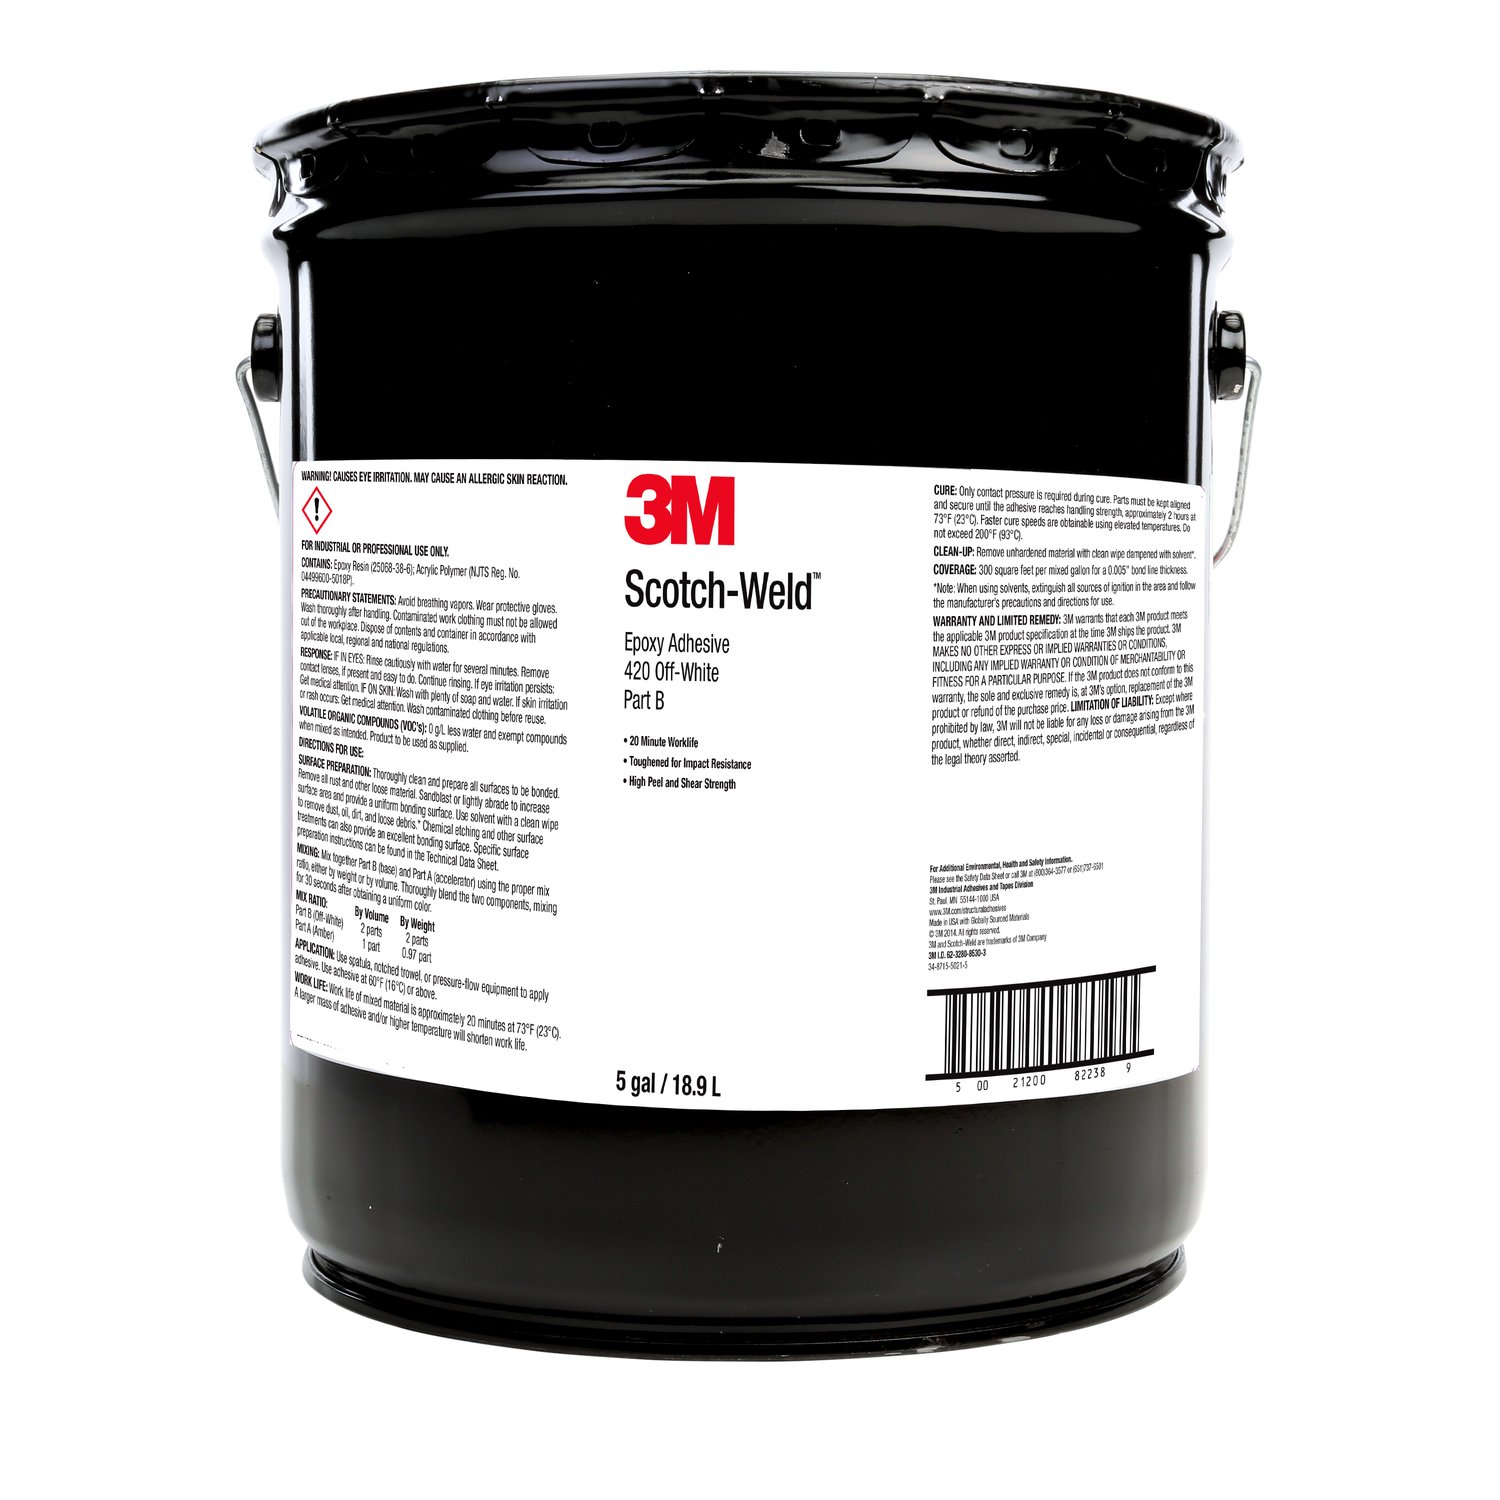 7100084537 - 3M Scotch-Weld Epoxy Adhesive 420NS, Black, Part B, 55 Gallon (43
Gallon Net), Drum